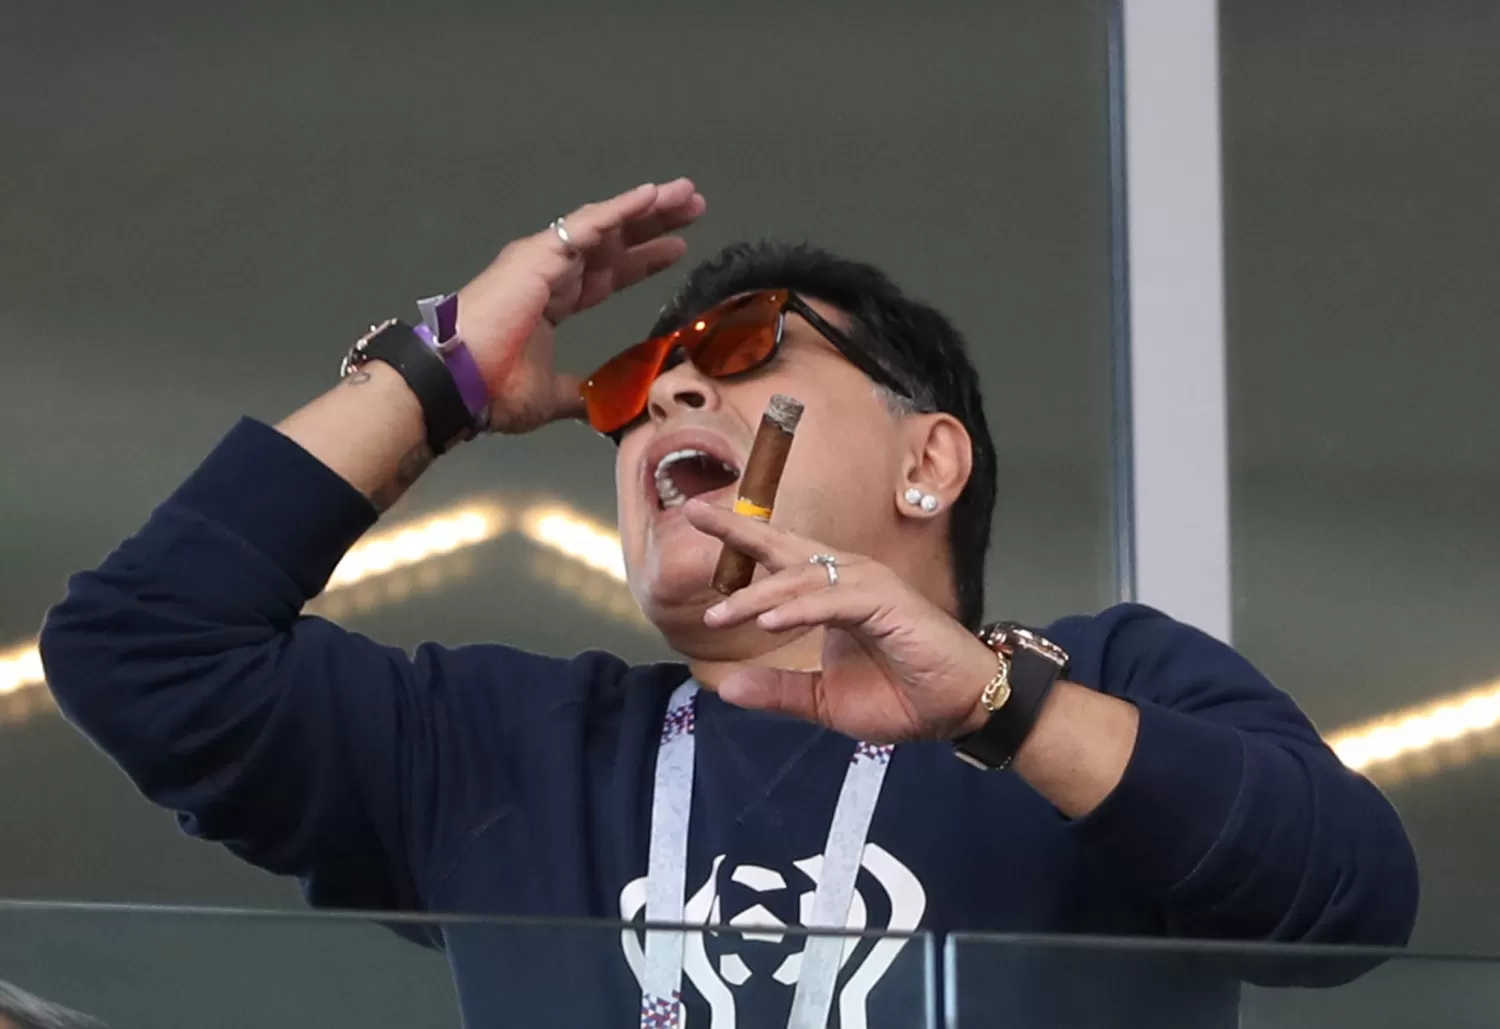 Diego Maradona asistió al encuentro Argentina-Islandia y le pegó a Sampaoli.
REUTERS